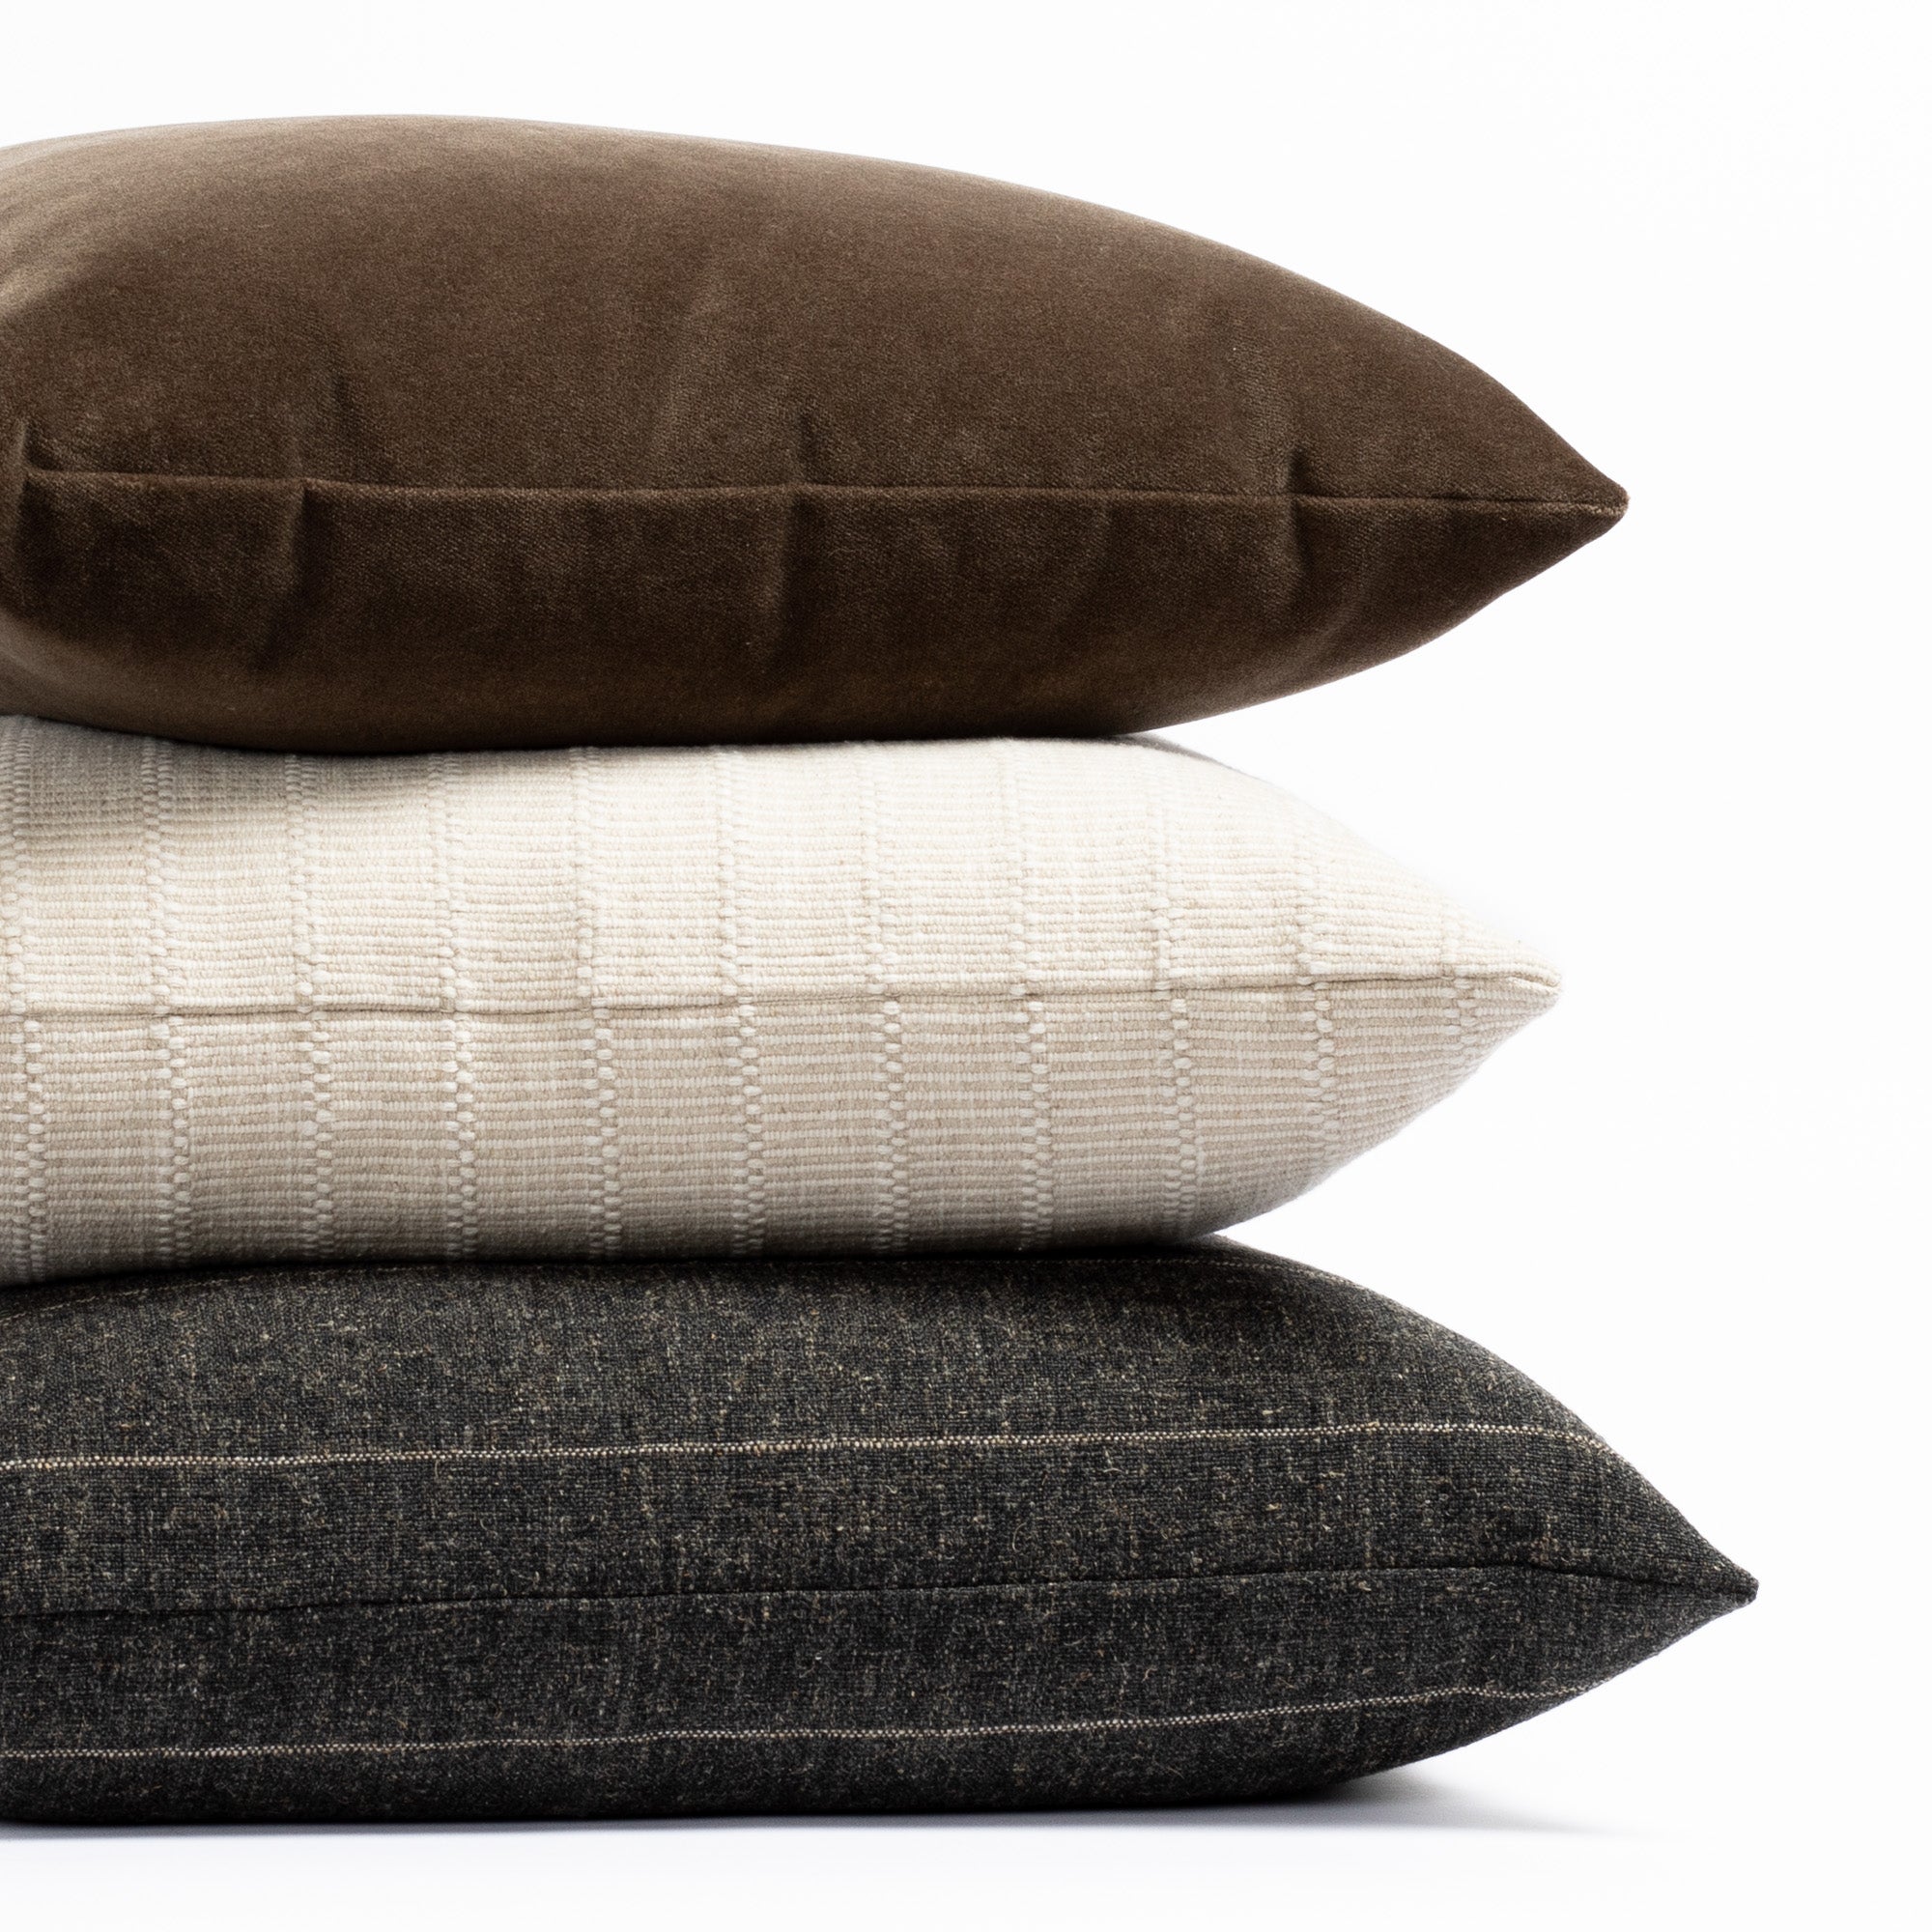 Designer throw pillows from Tonic Living